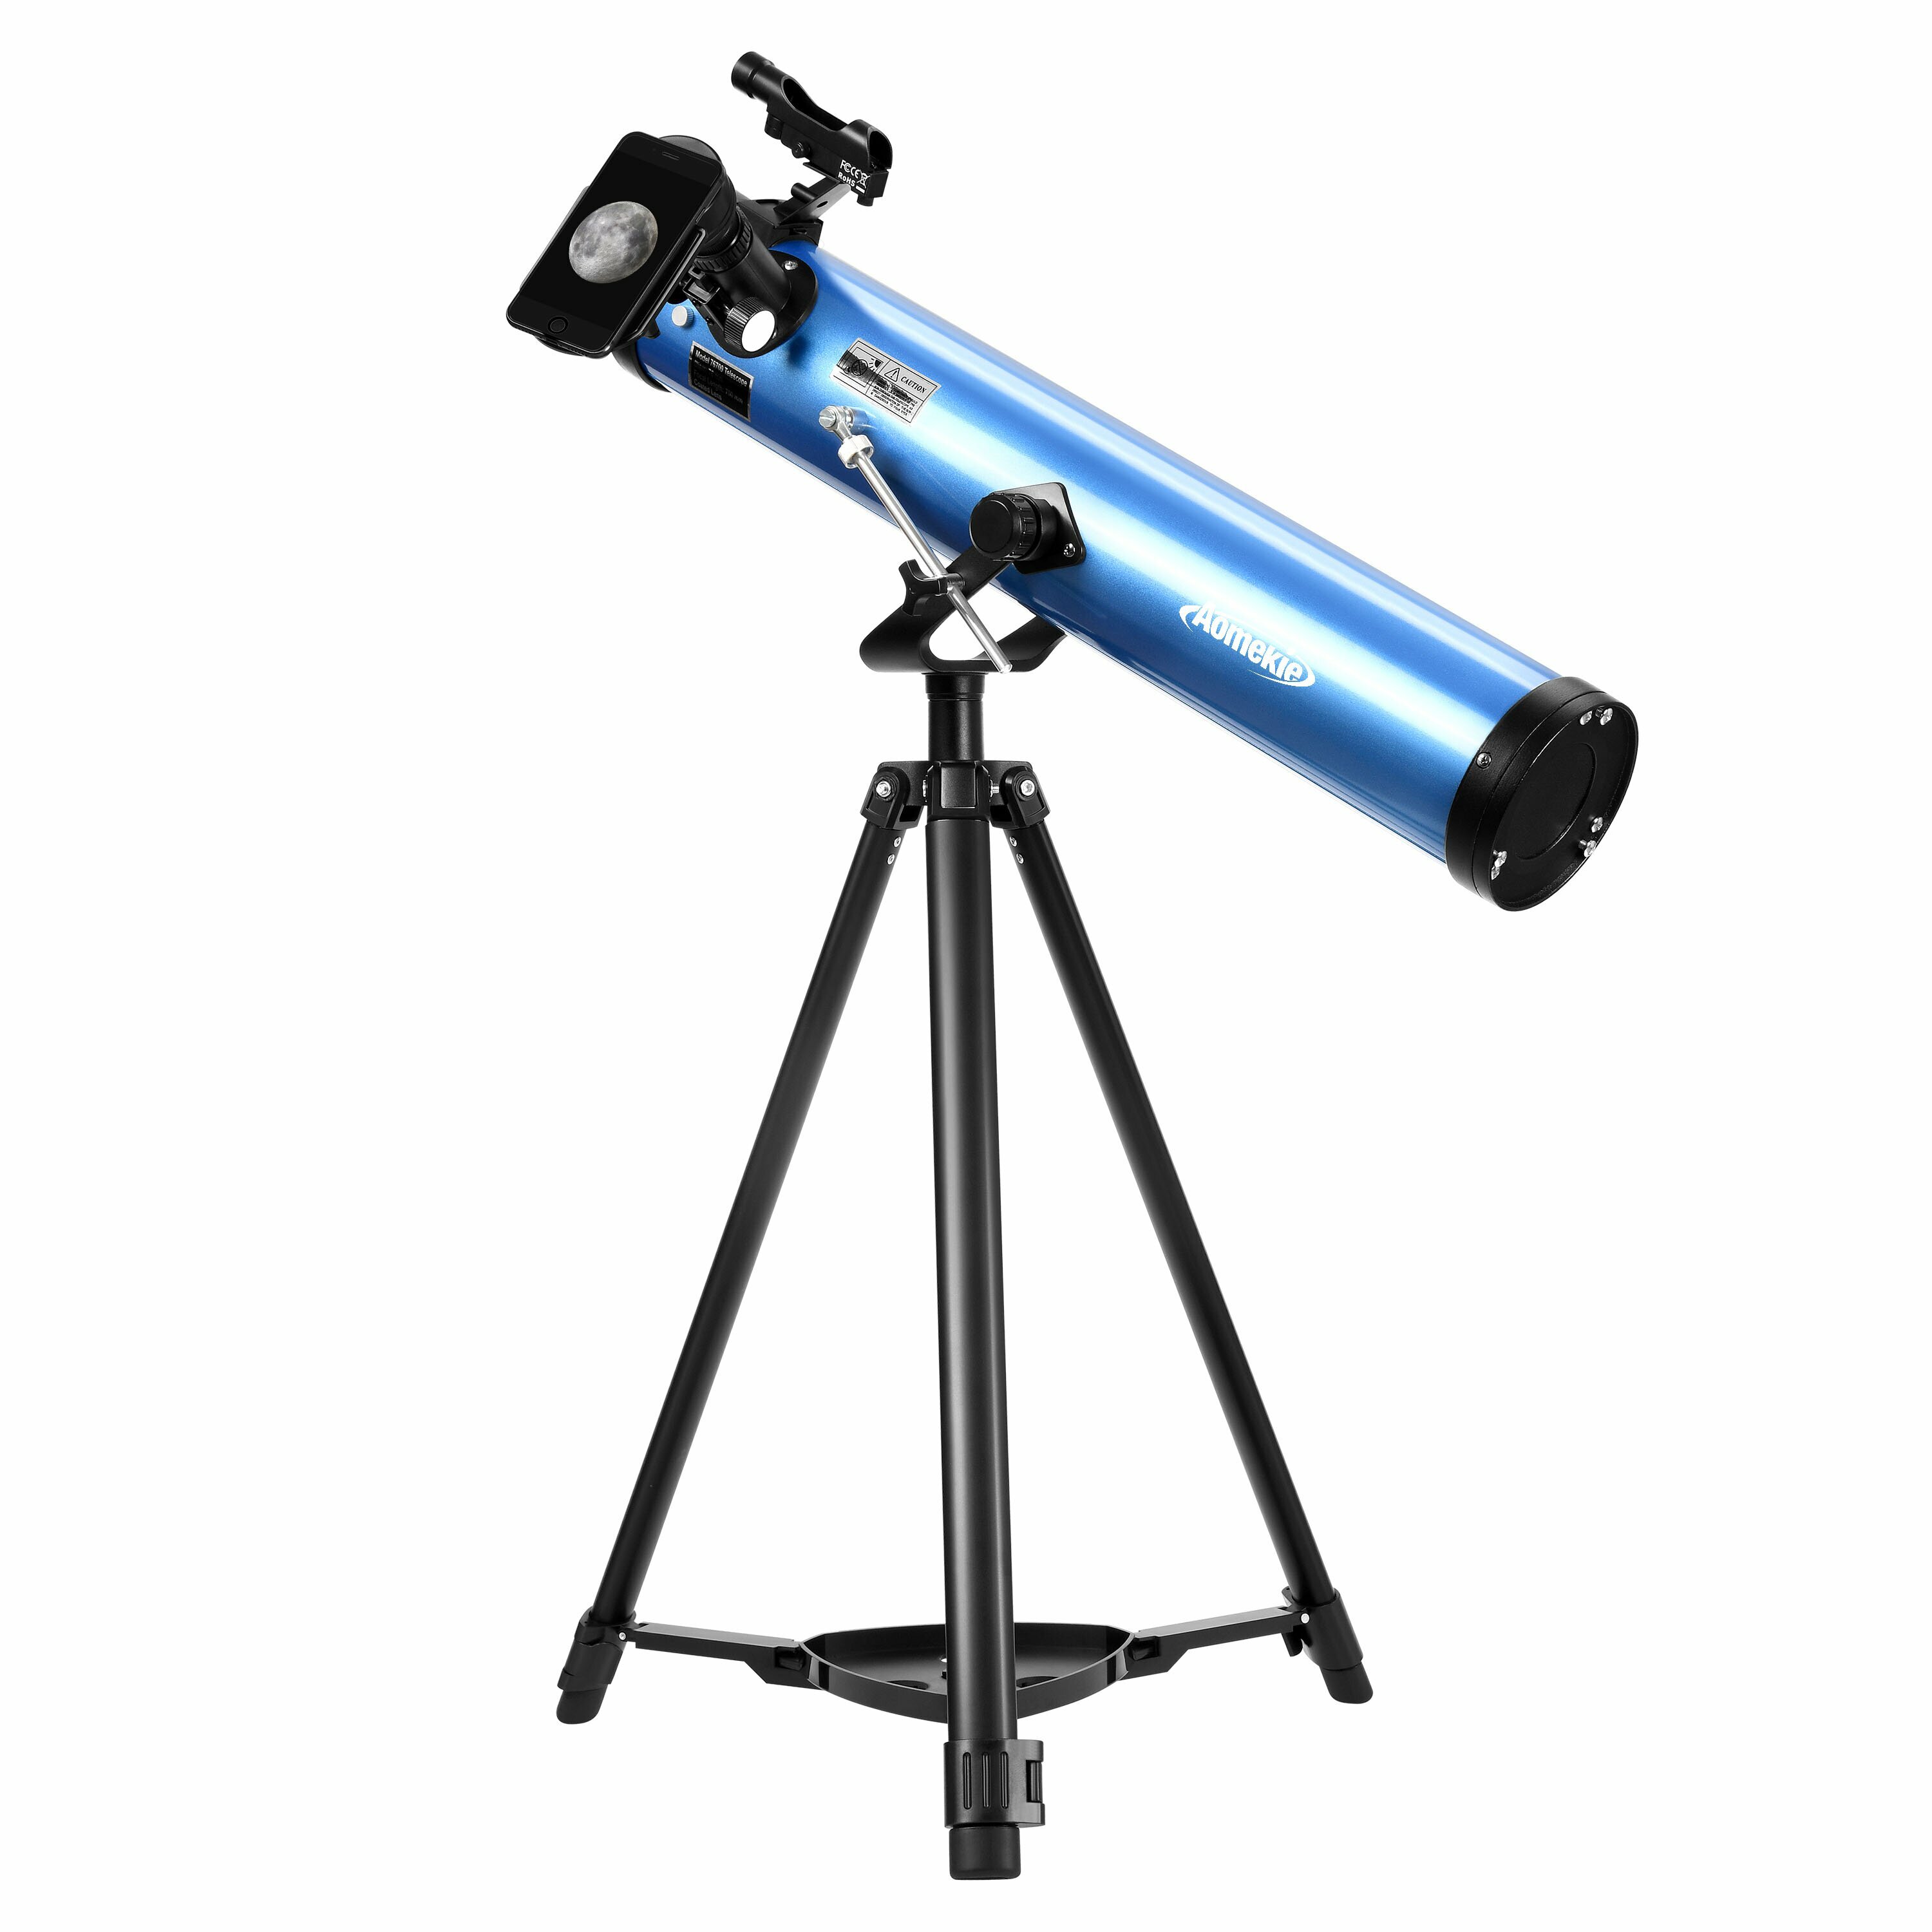 [EU Απευθείας] Αντανακλαστικά τηλεσκόπια AOMEKIE για αρχάριους αστρονόμους 76mm/700mm με προσαρμογέα τηλεφώνου,ελεγκτή Bluetooth,τρίποδο,εντοπιστή και φίλτρο Φεγγαριού A02018